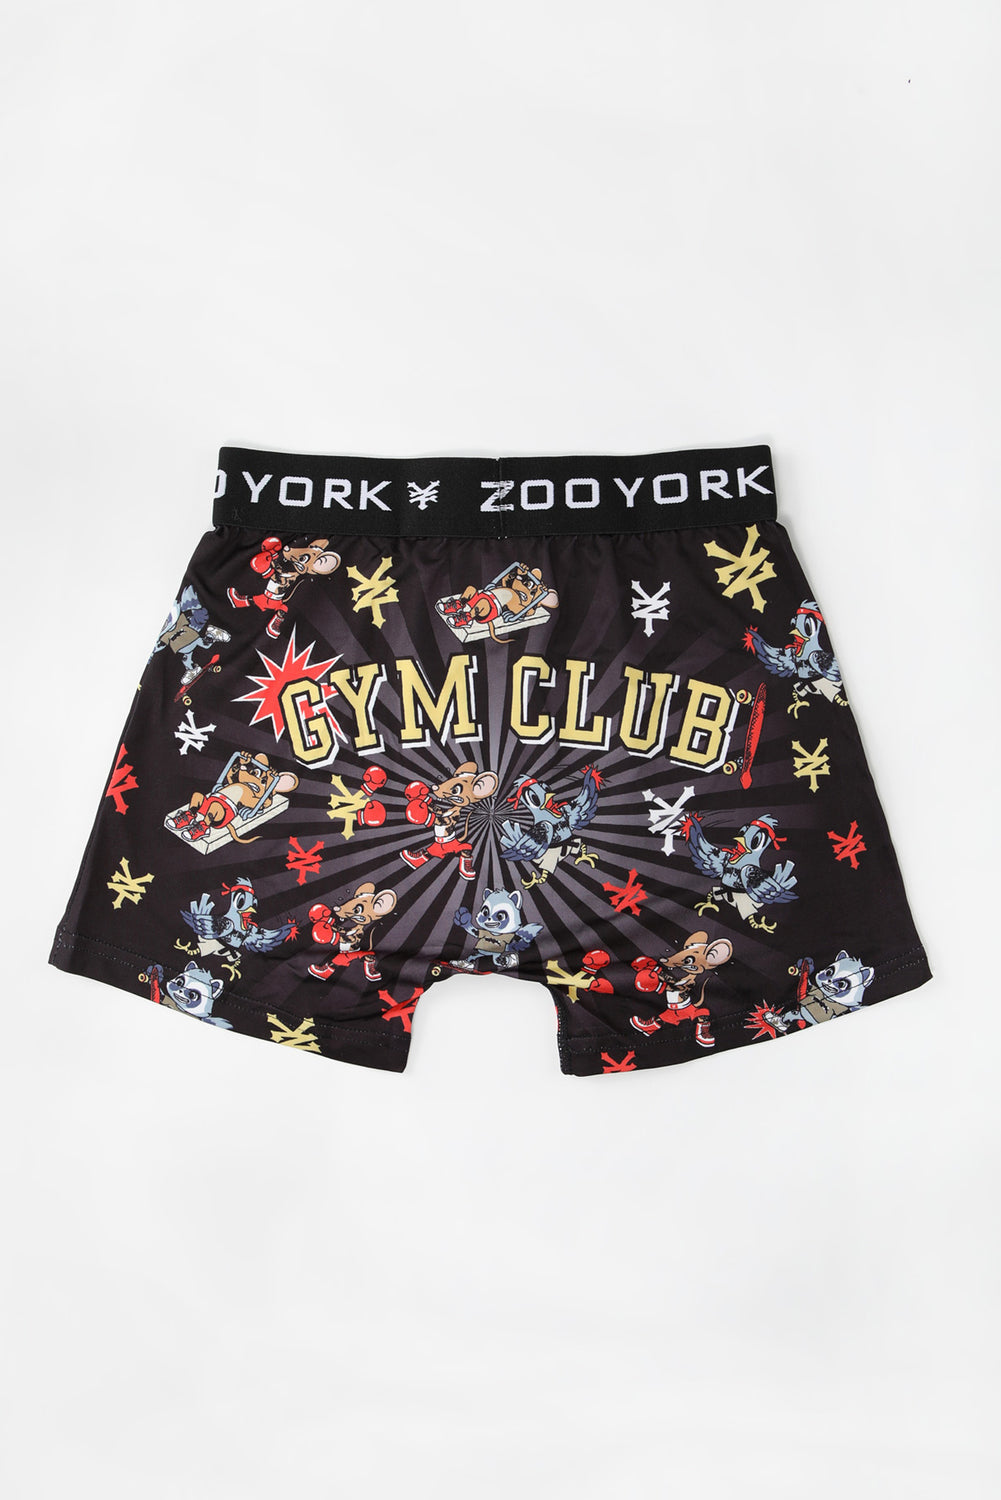 Zoo York Mens Gym Club Boxer Brief – West49